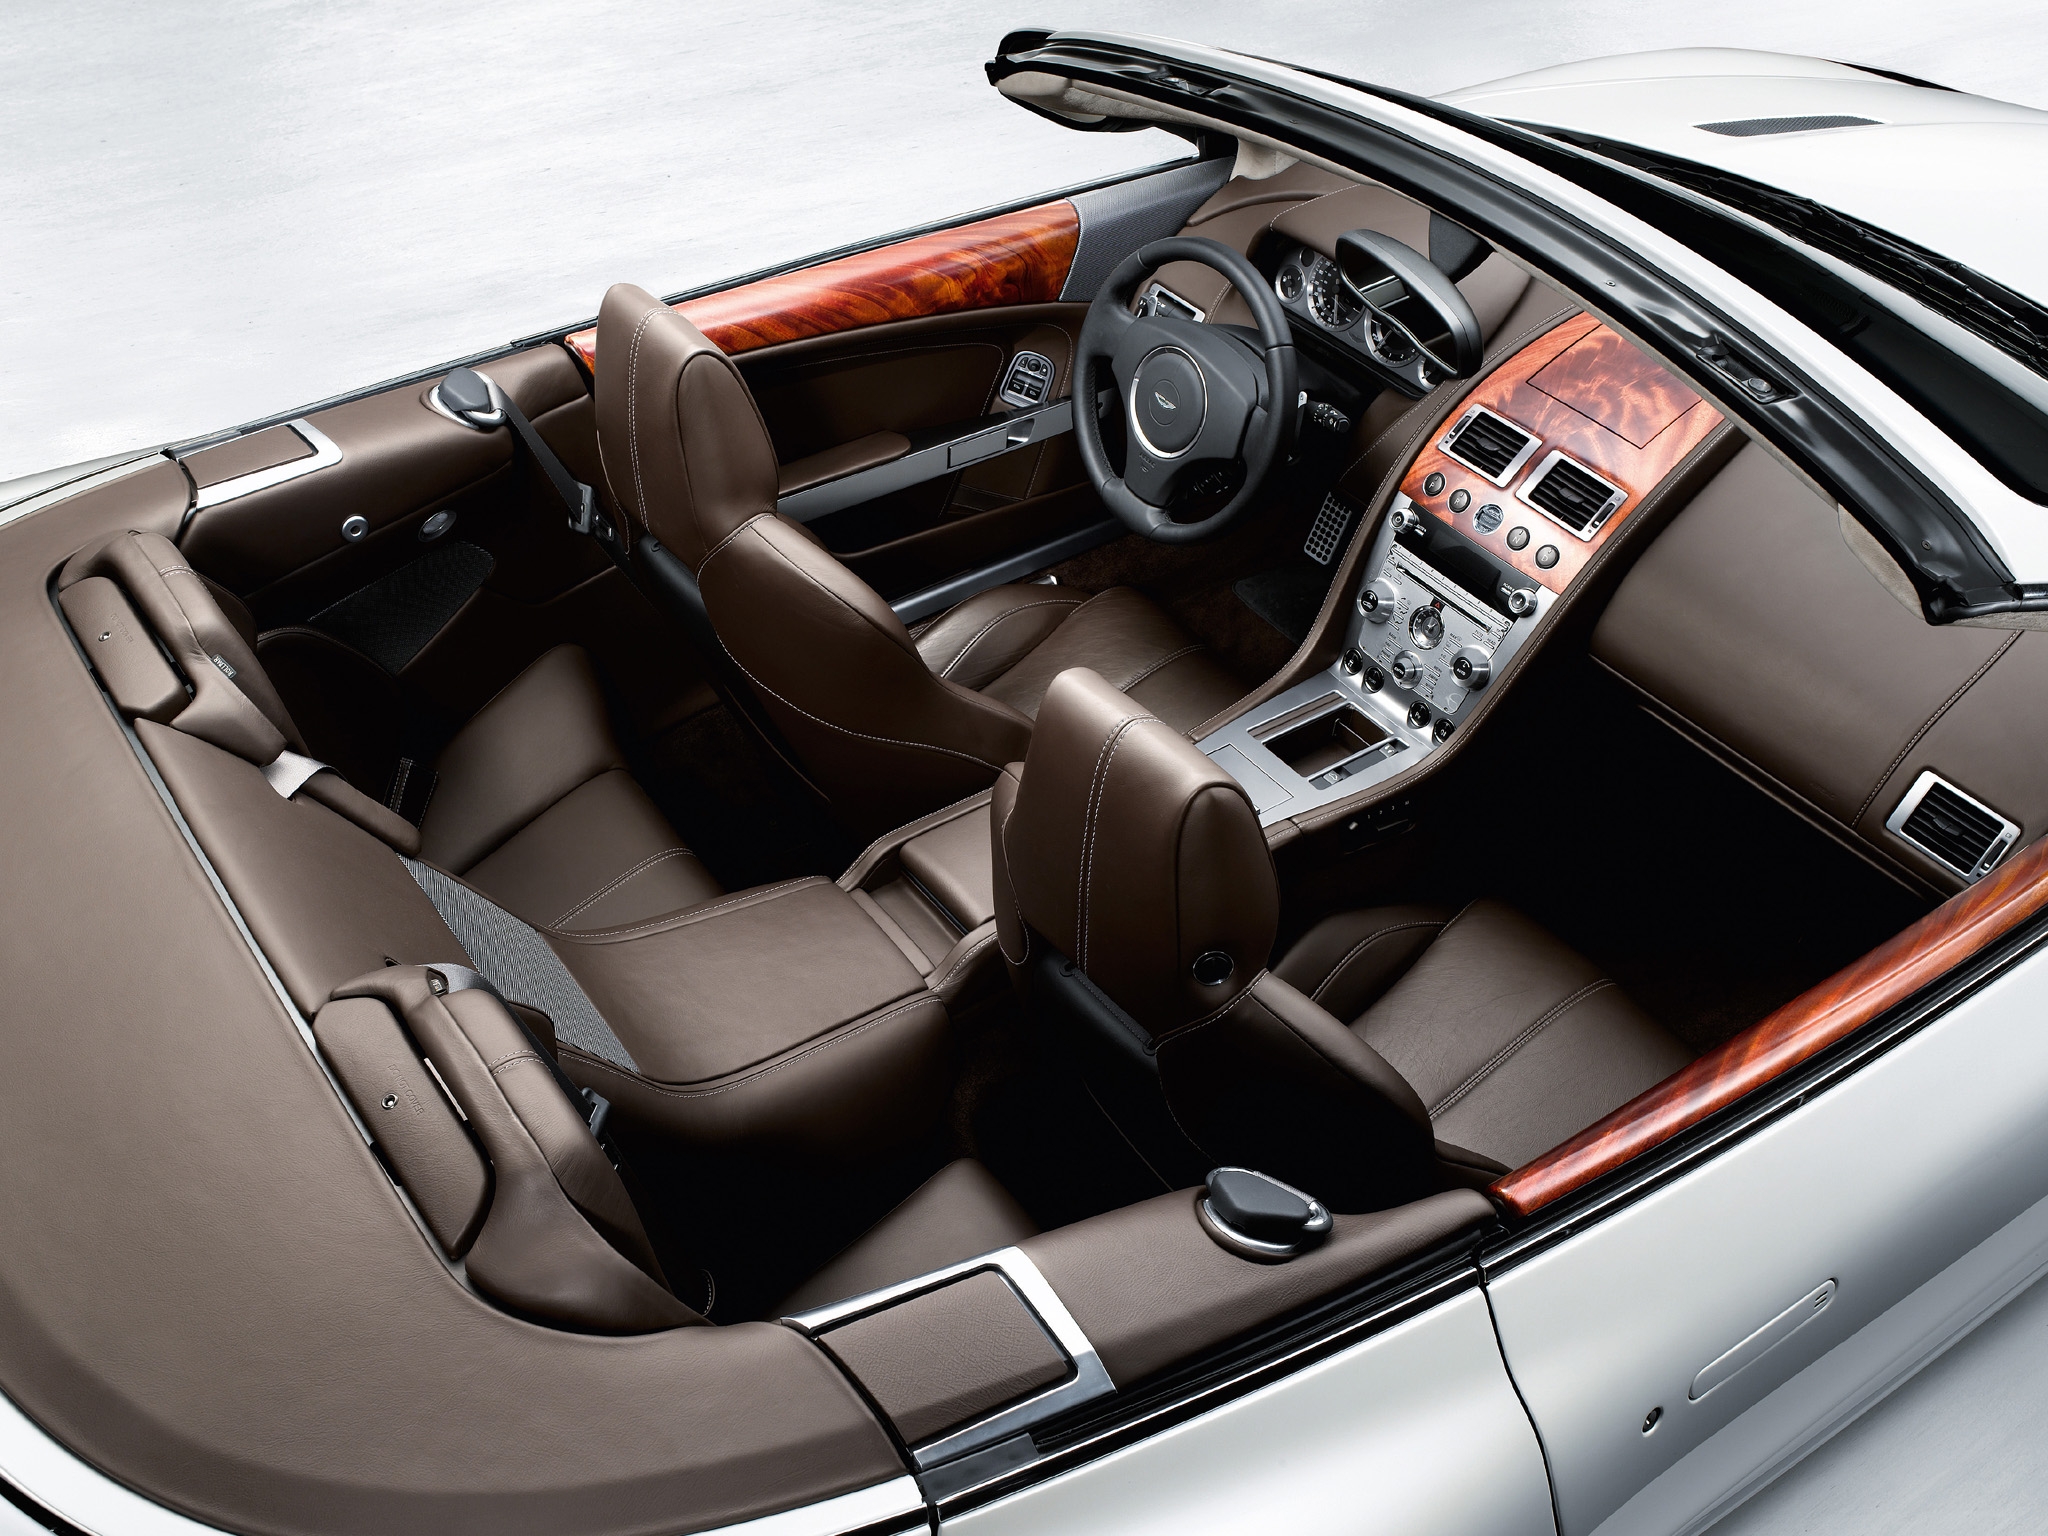 steering wheel, interior, aston martin, cars, view from above, brown, 2008, rudder, salon, speedometer, db9 Ultra HD, Free 4K, 32K